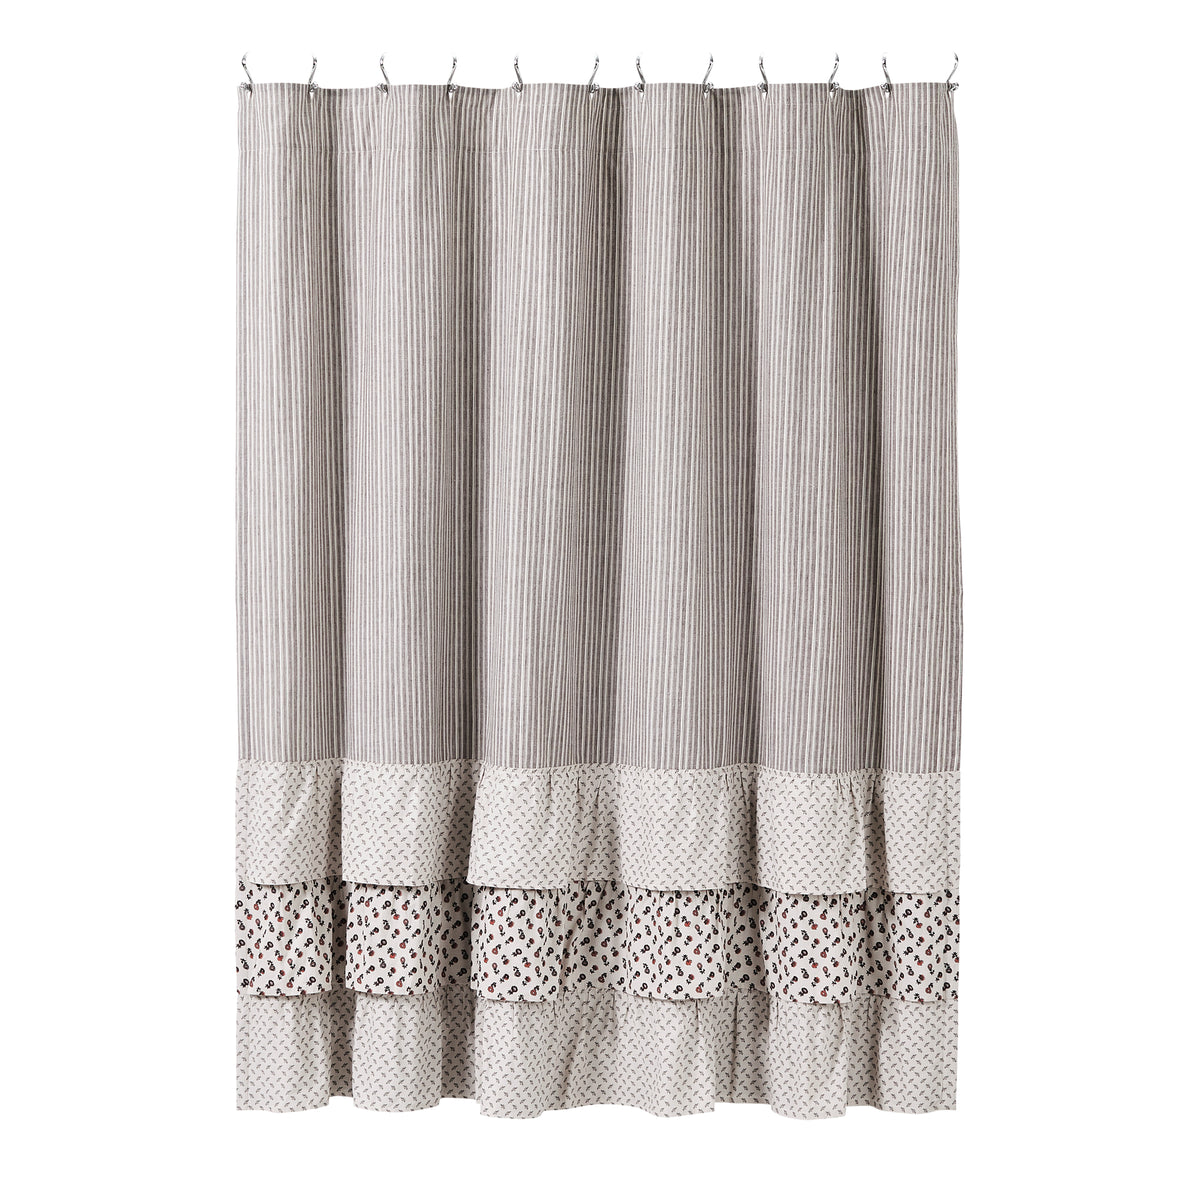 Florette Ruffled Shower Curtain 72x72